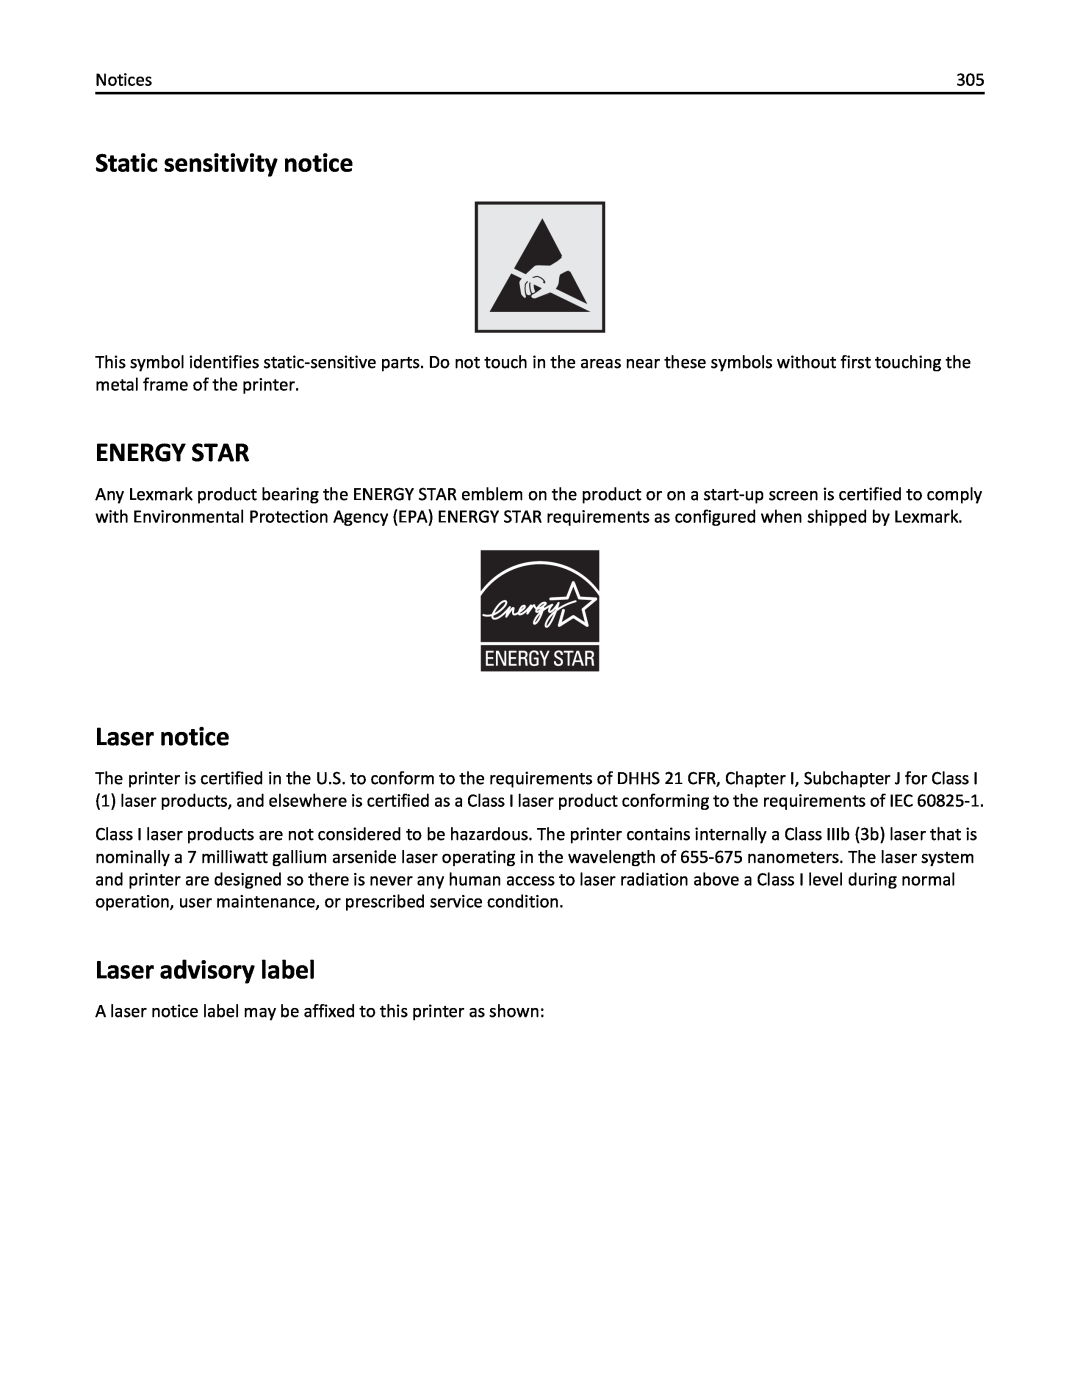 Lexmark MX510, 470, 35S5701, 670, 675, MX410 manual Static sensitivity notice, Energy Star, Laser notice, Laser advisory label 